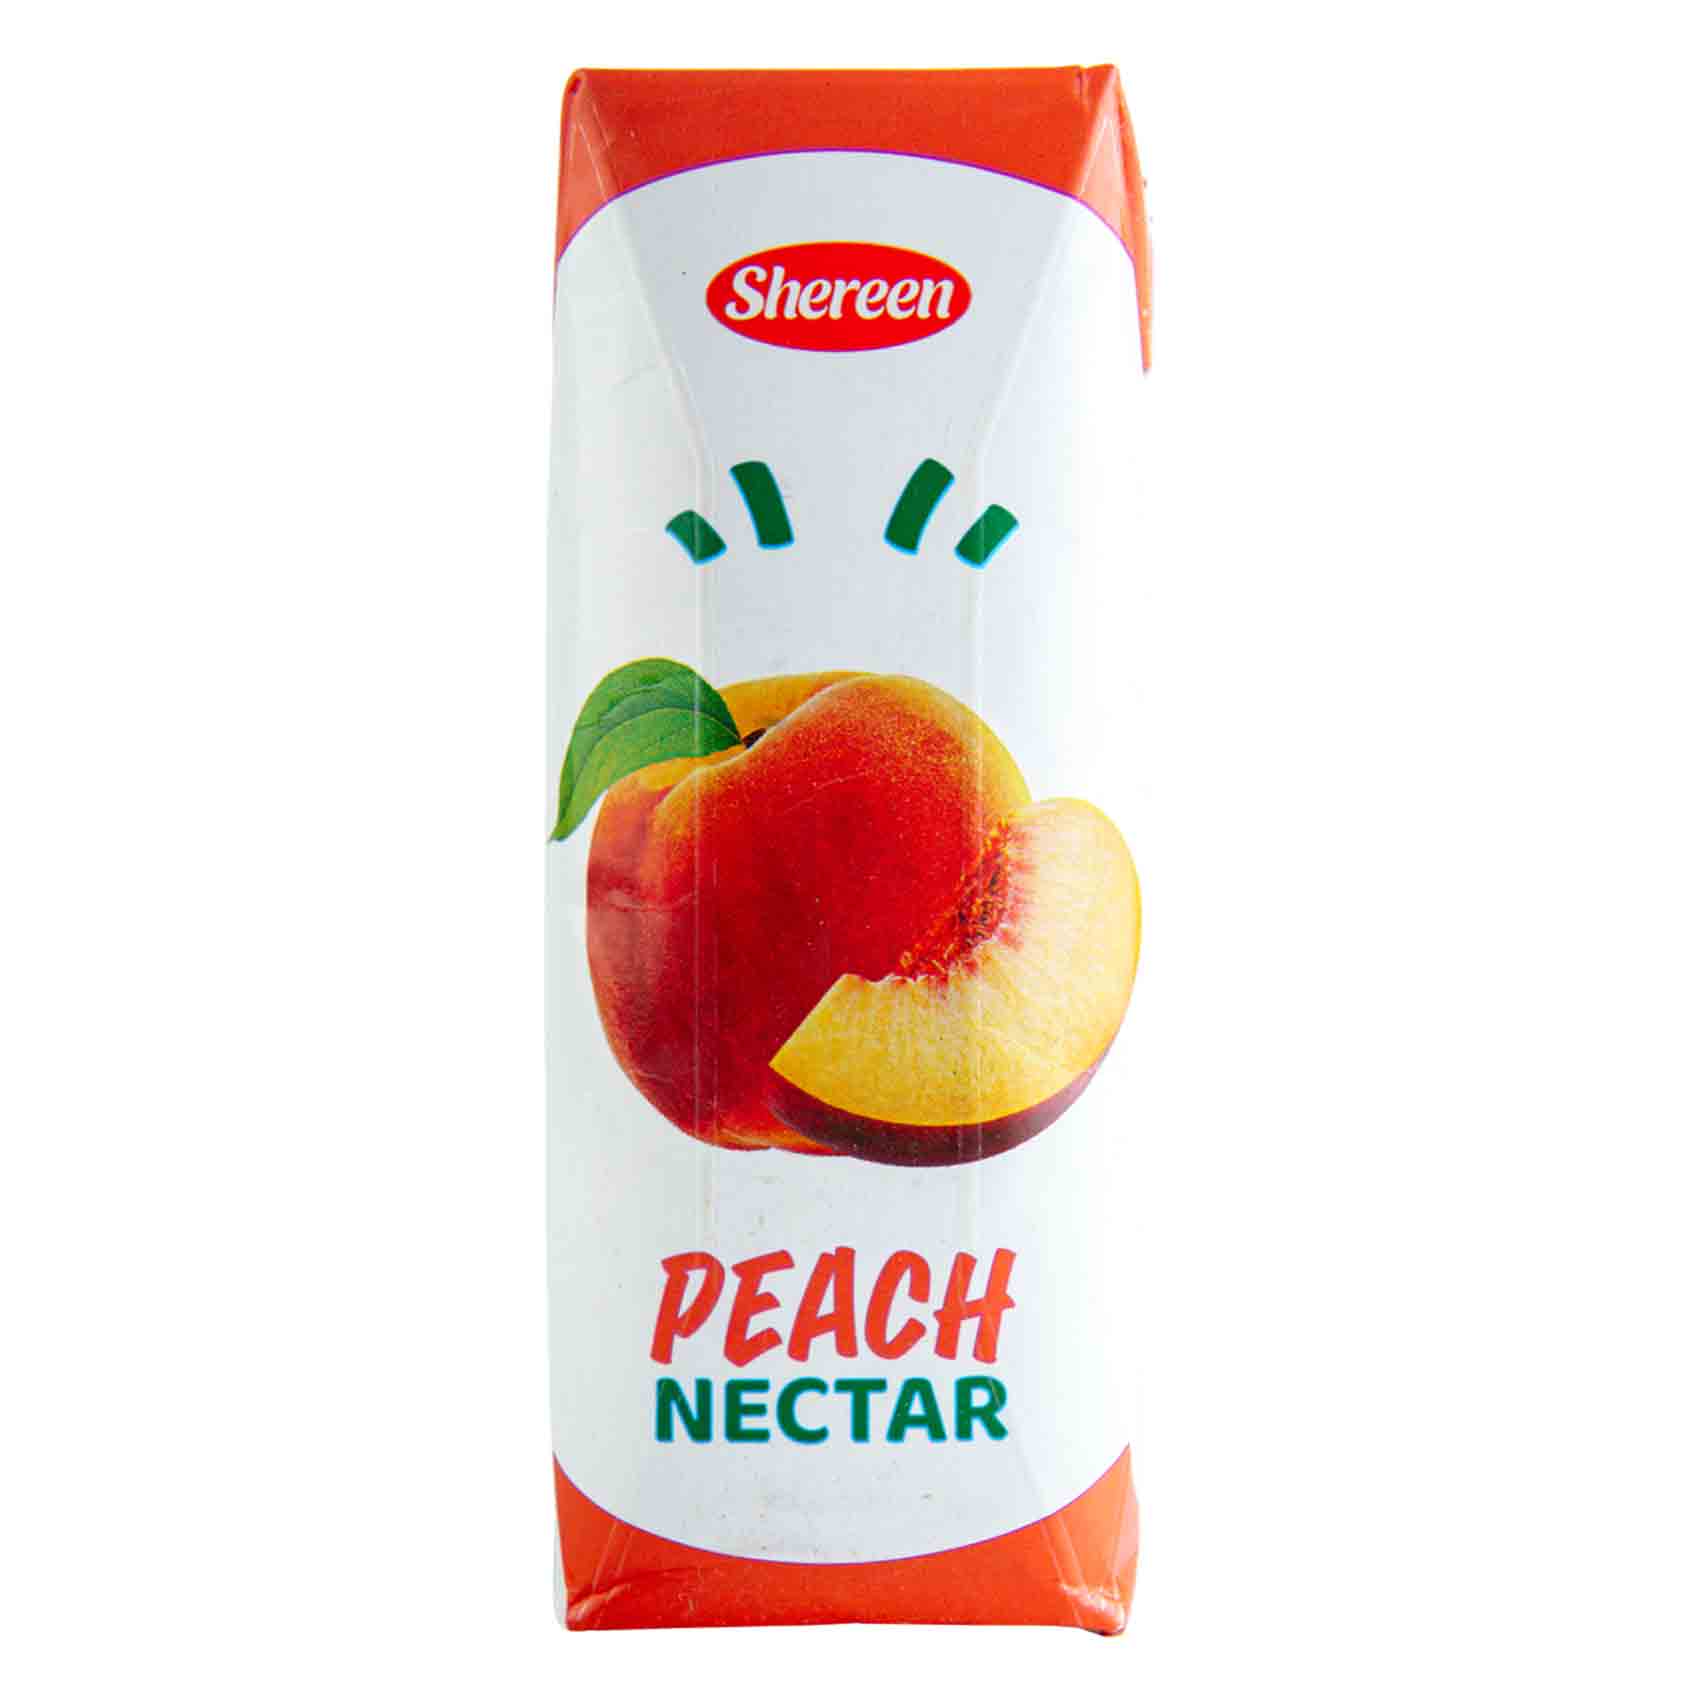 Shereen Peach Nectar Juice 250ml